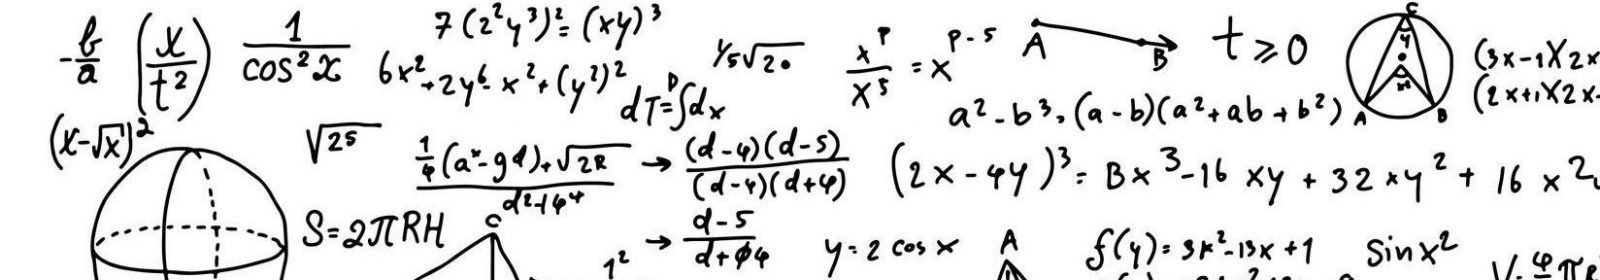 mltv4labs matematica simboli e formule